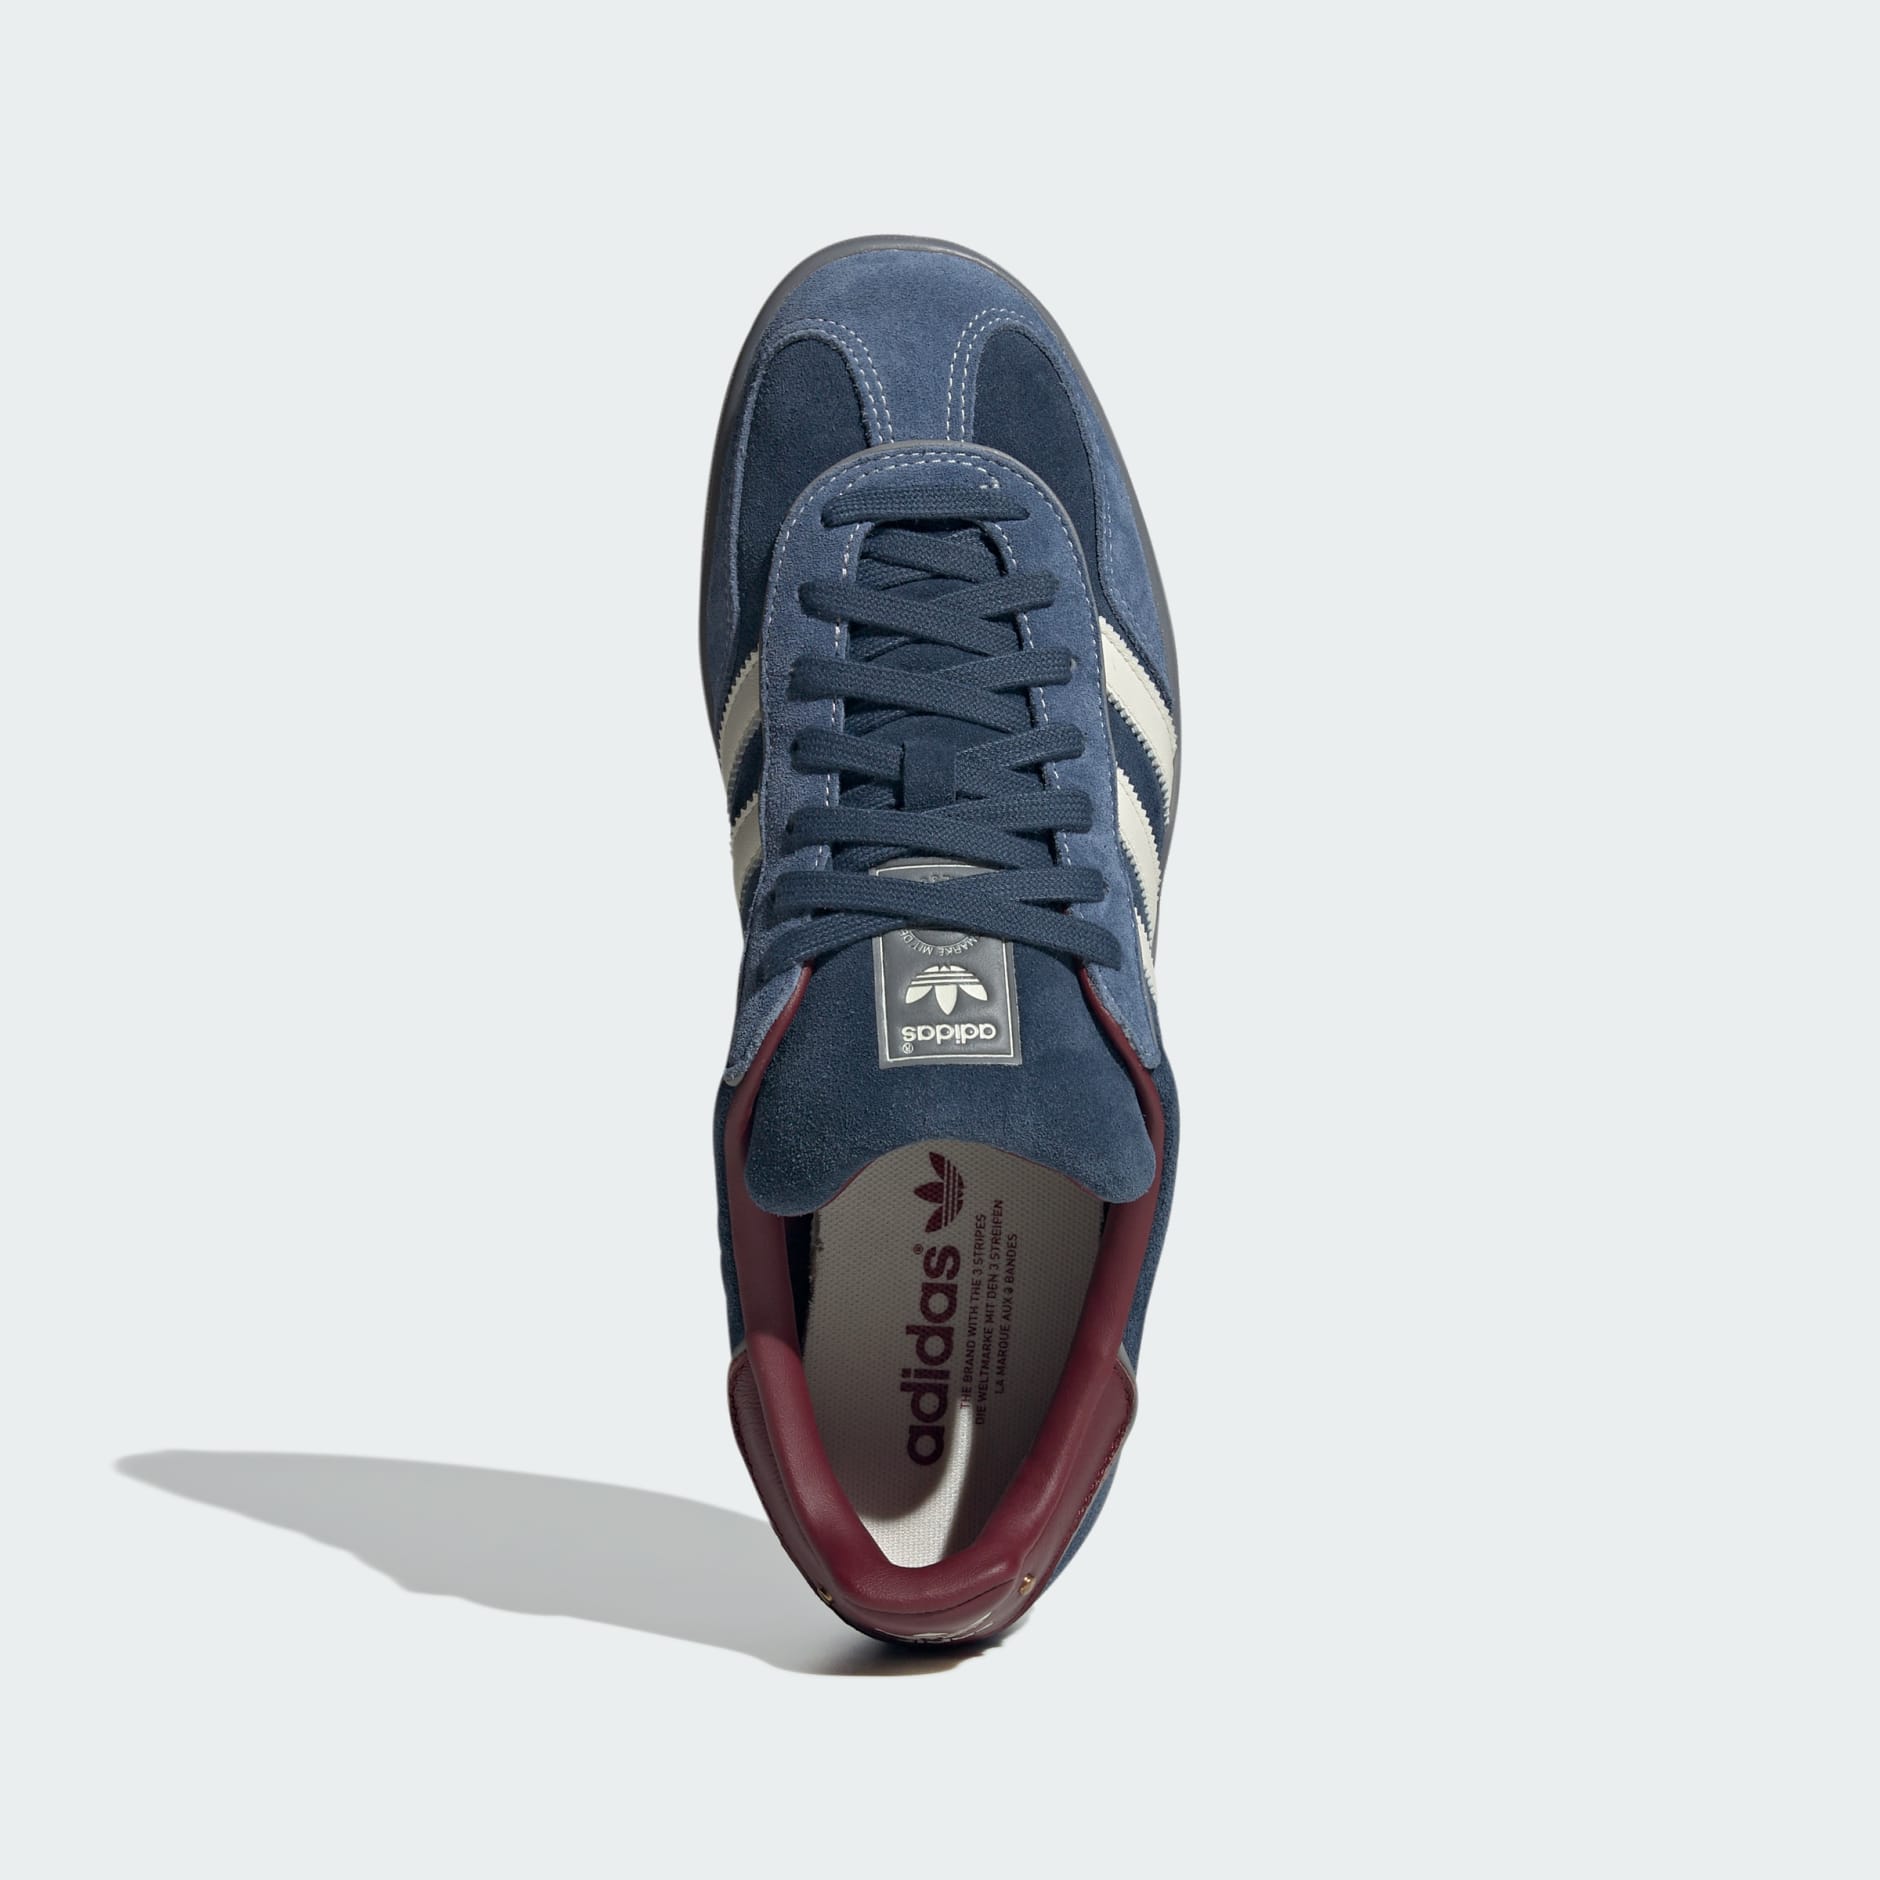 adidas gazelle maroon and blue